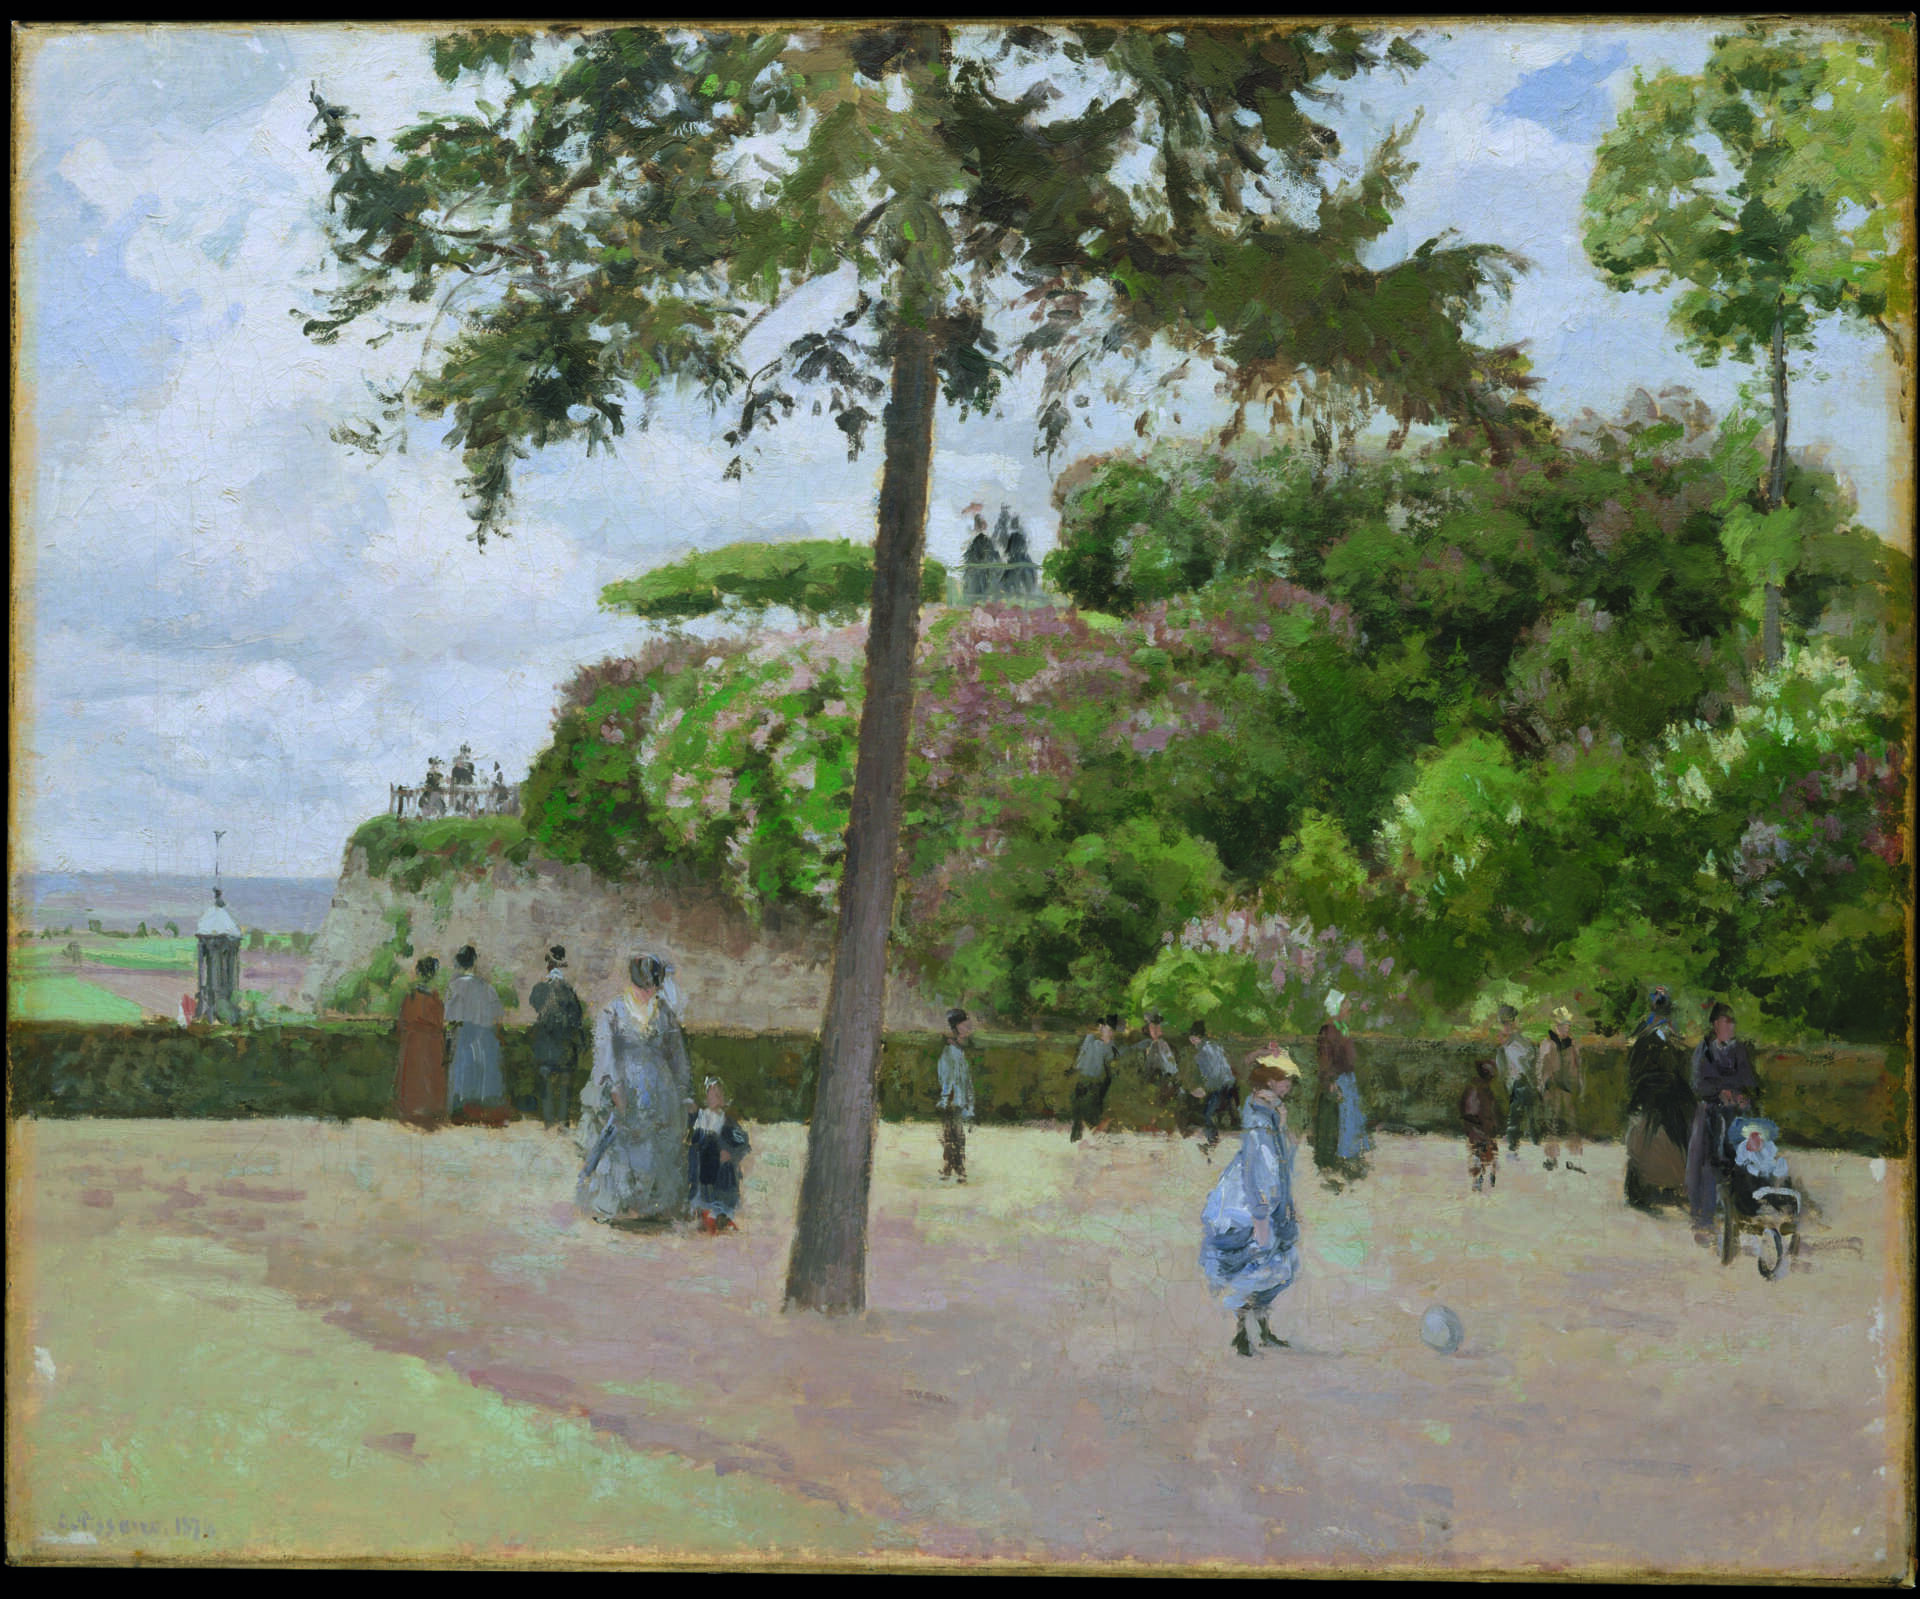 Camille Pissarro, Le Jardin de la ville de Pontoise
© The Metropolitan Museum of Art, New York